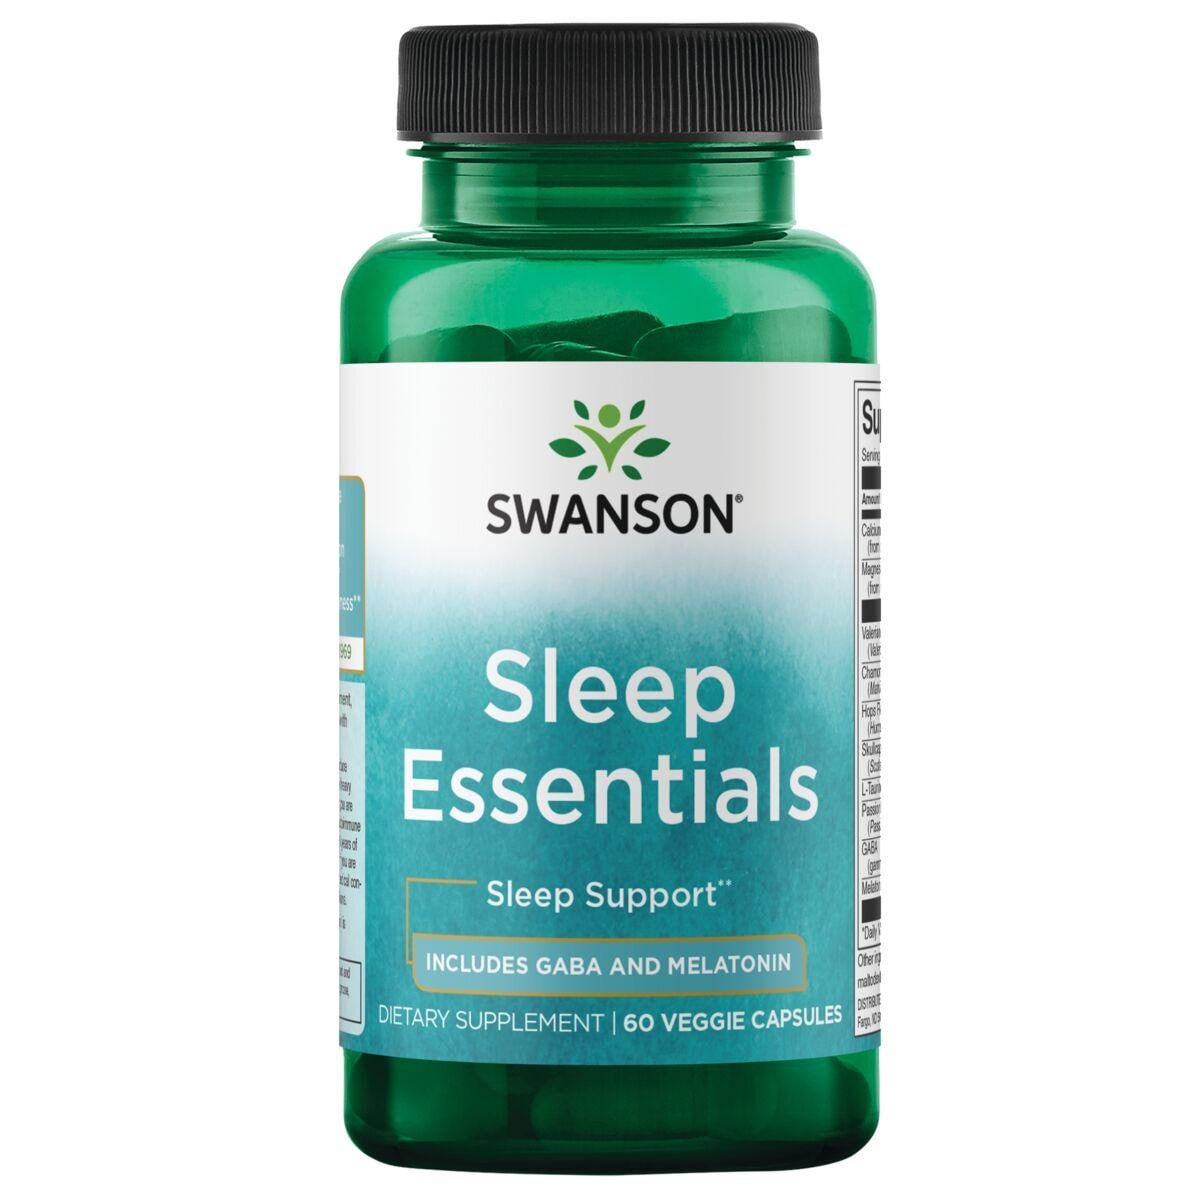 Swanson Condition Specific Formulas Sleep Essentials Includes Gaba and Melatonin Supplement Vitamin | 60 Veg Caps